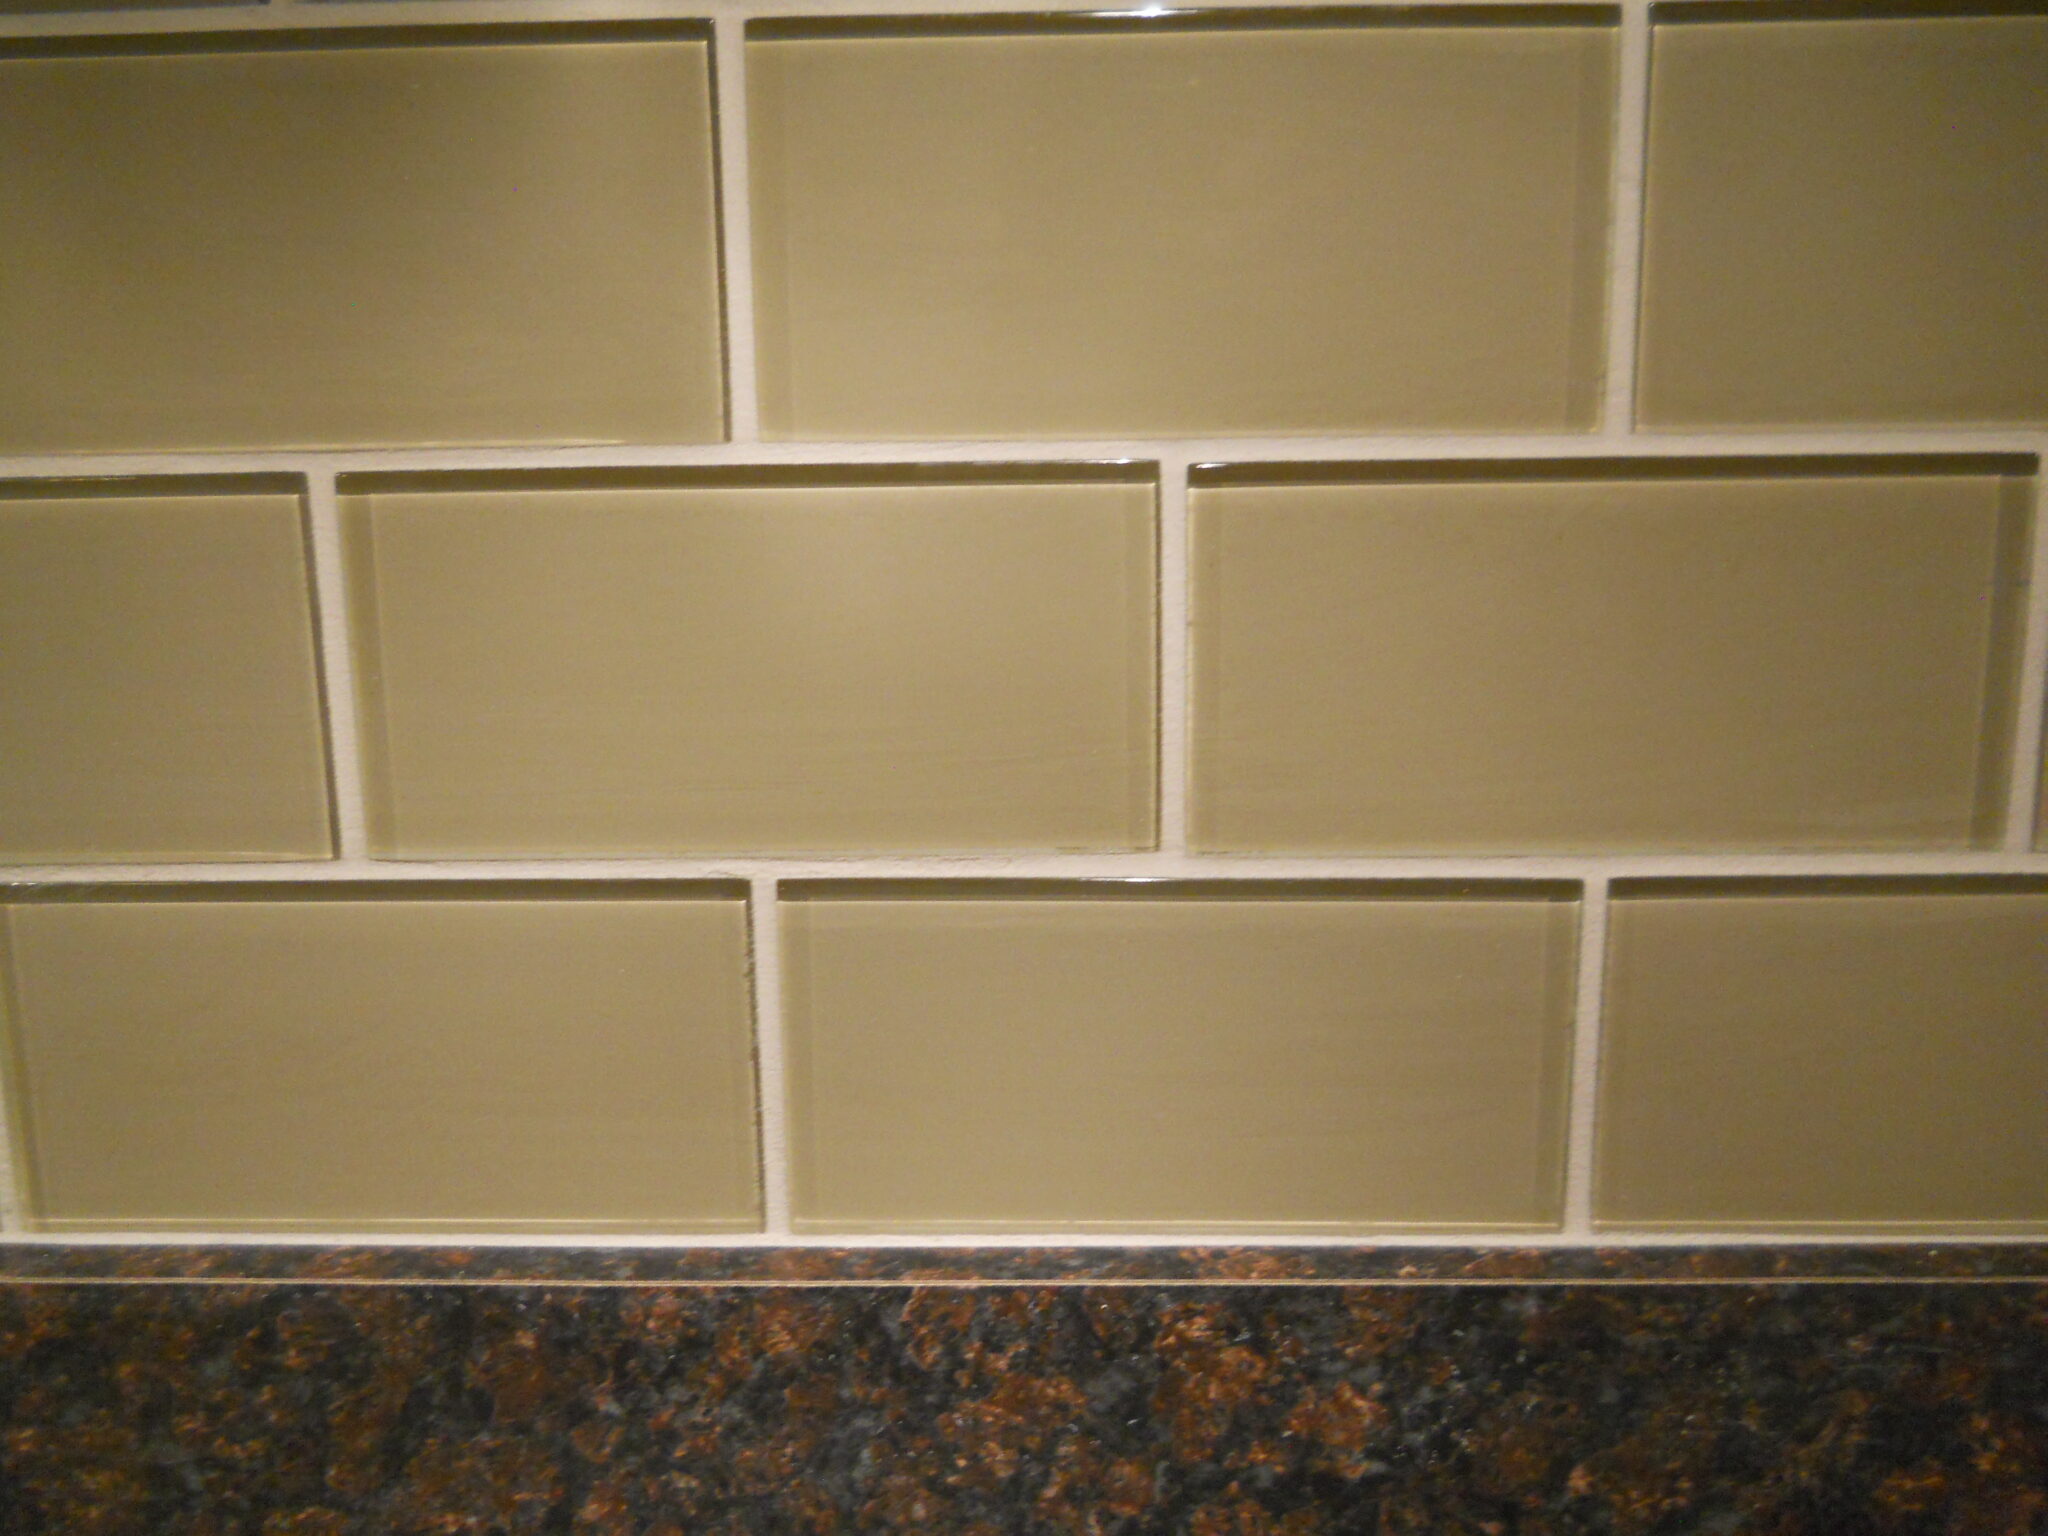 Backsplash grout repair on kitchen tile